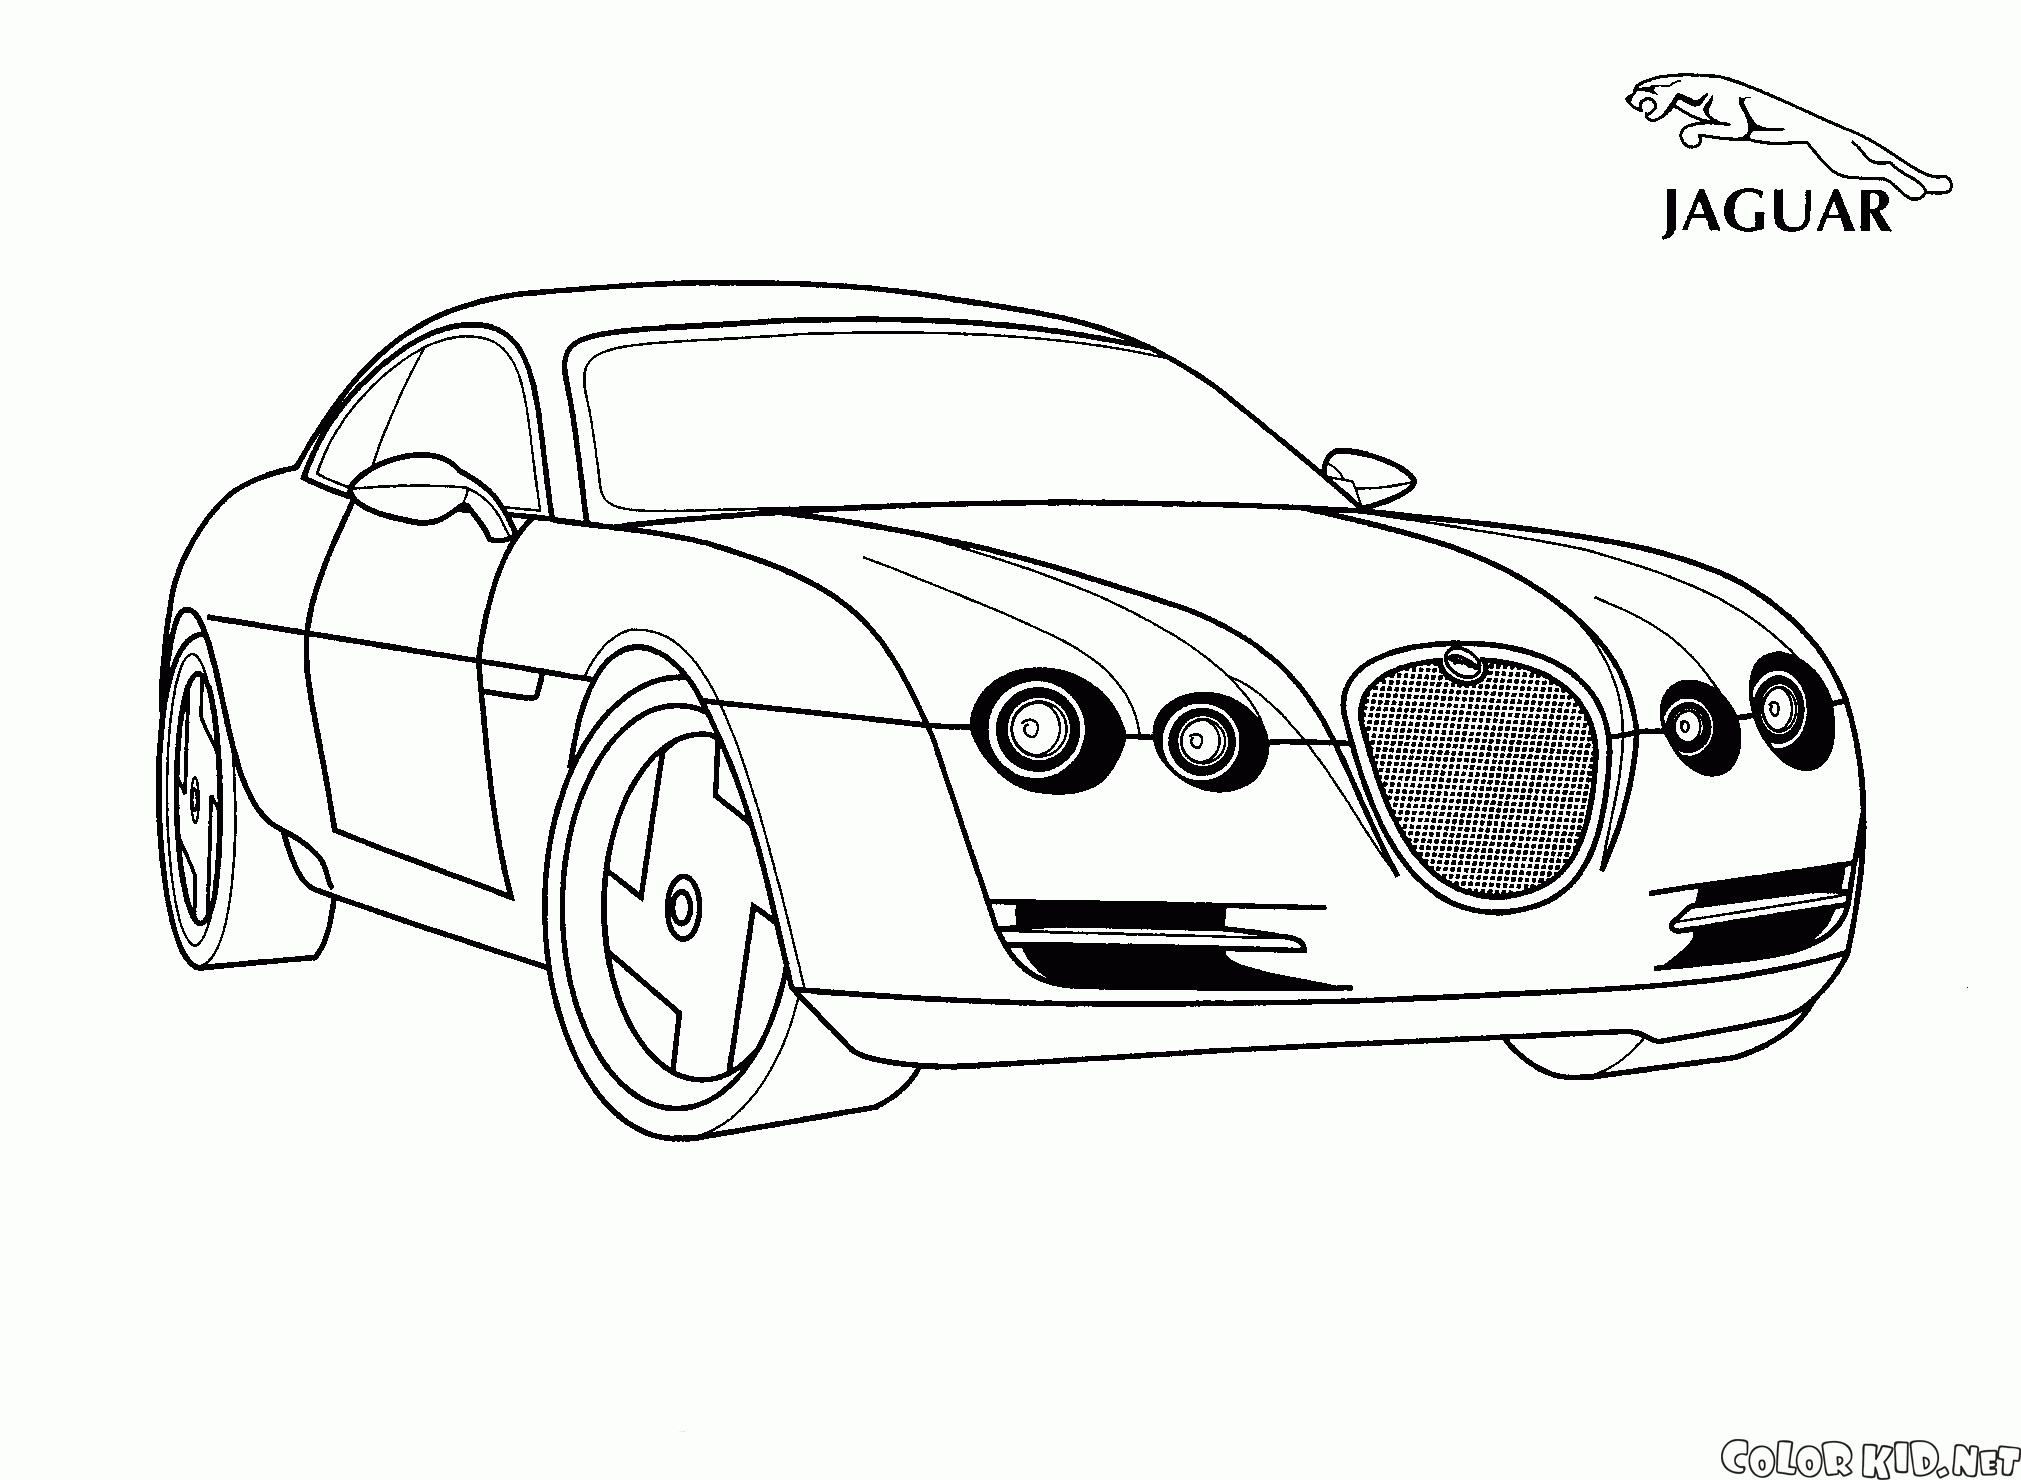 Jaguar (UK)